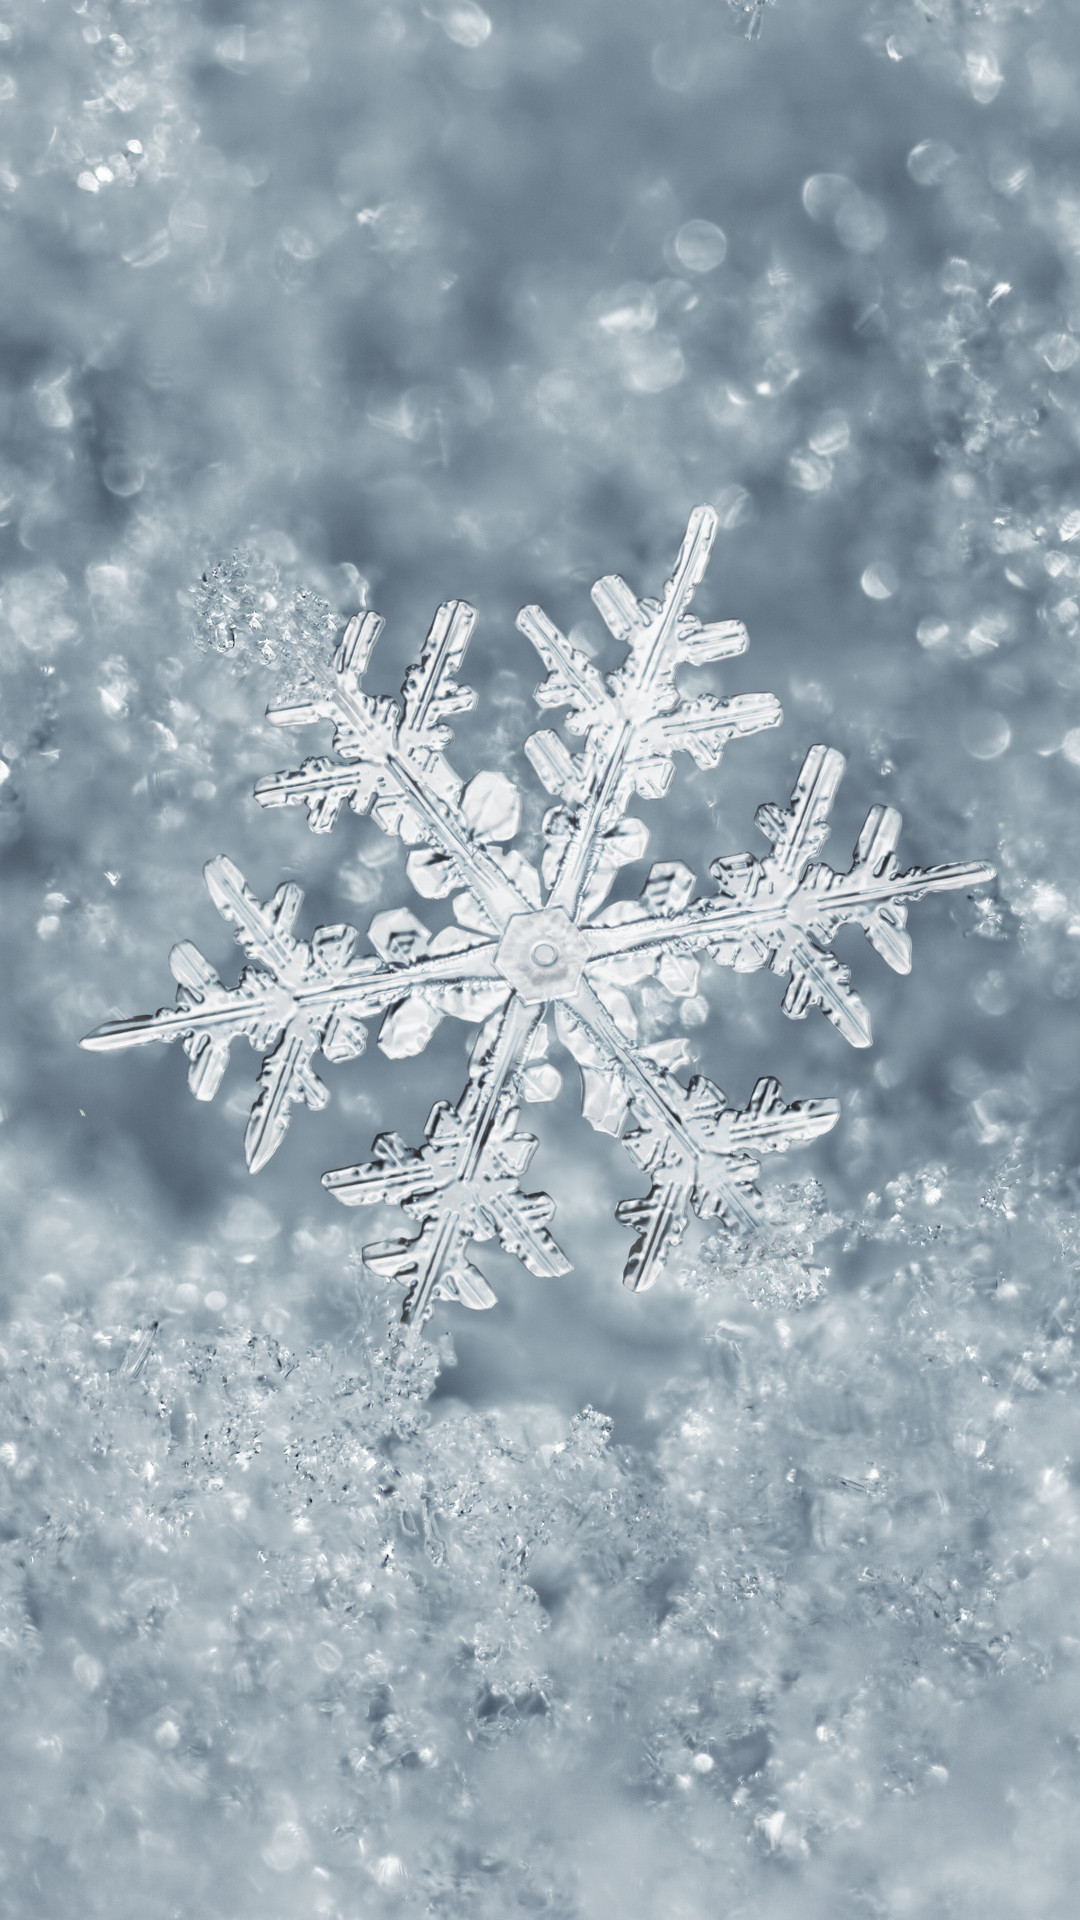 1080x1920 Ice Snowflake iPhone 7 Plus Wallpaper